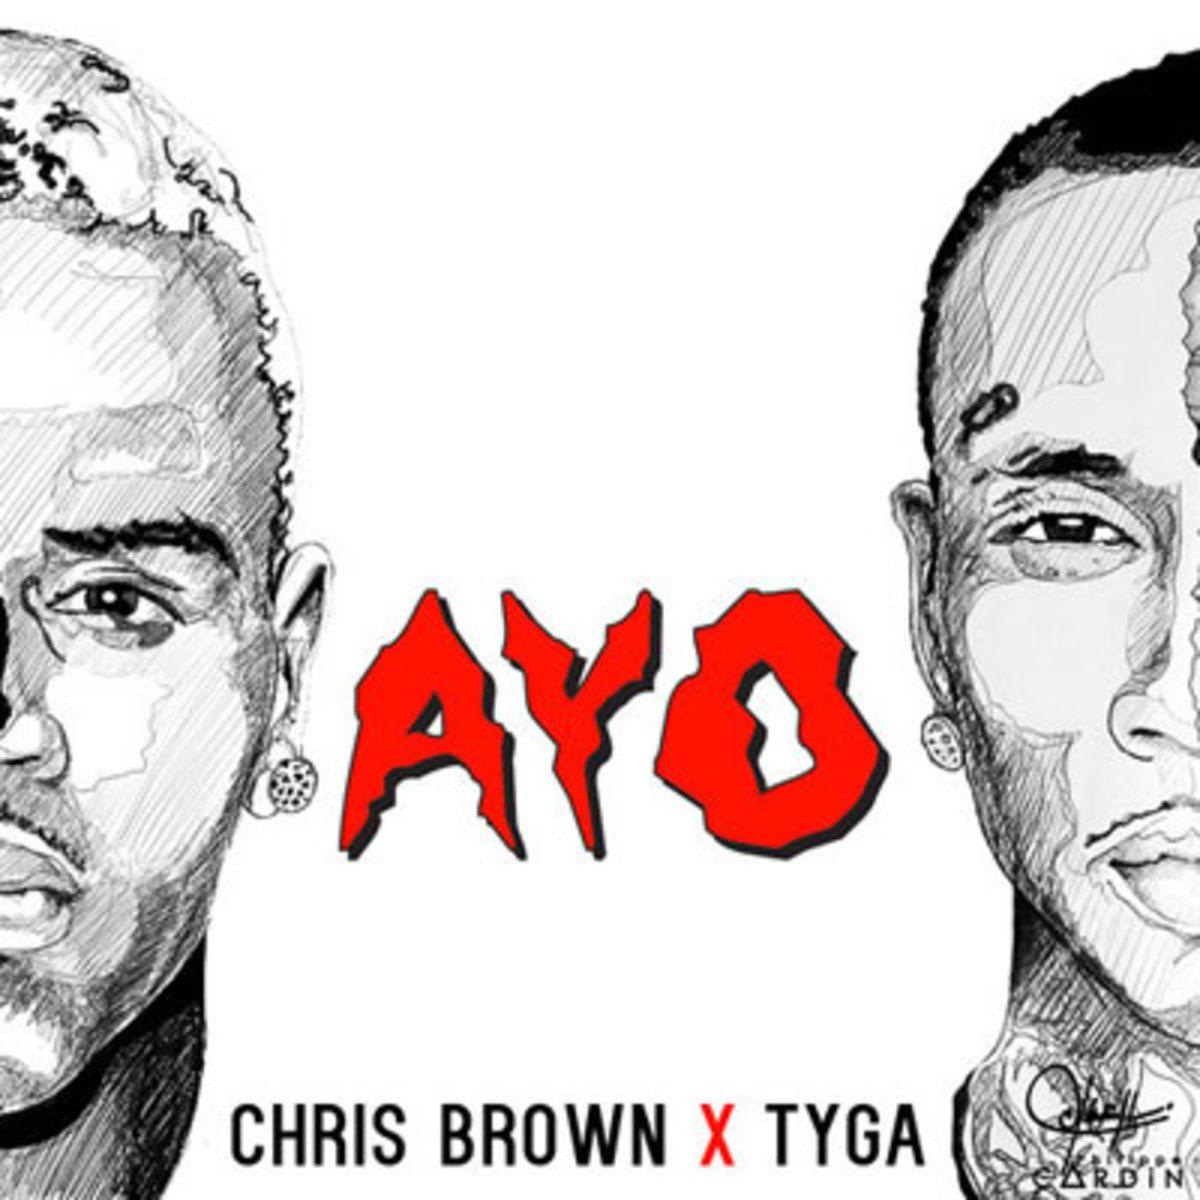 Chris Brown X Logo - Chris Brown x Tyga - AYO - DJBooth